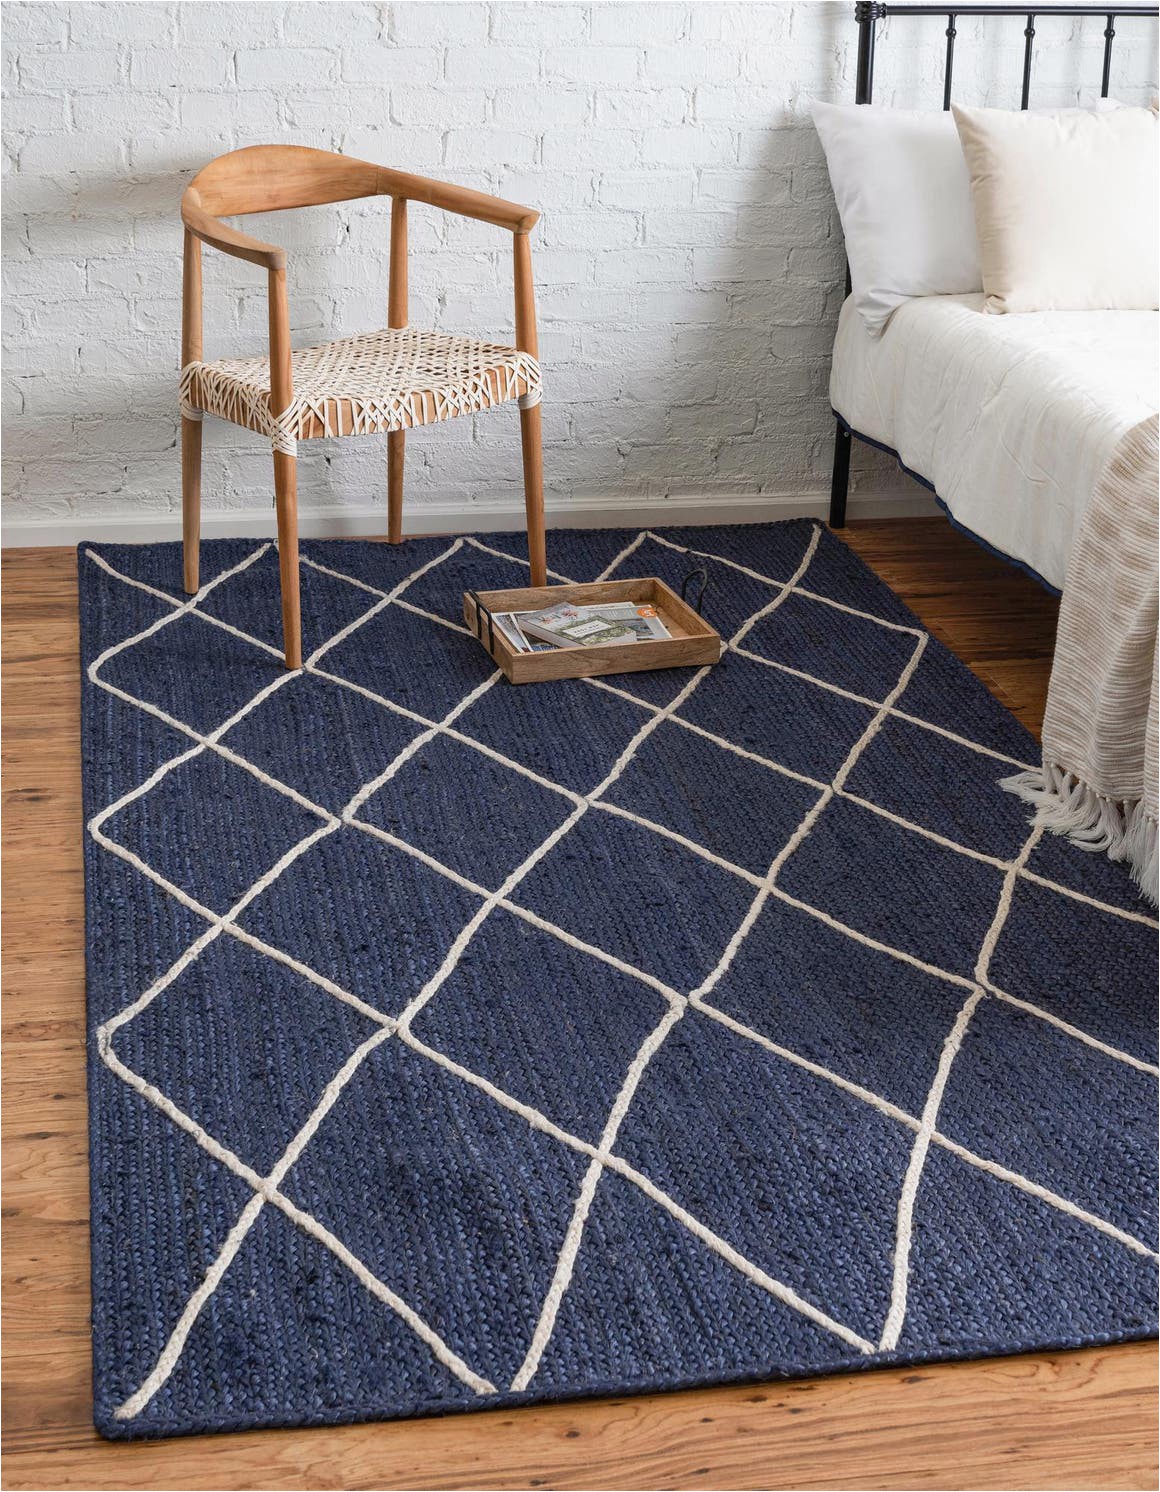 navy blue 4x6 braided jute area rug